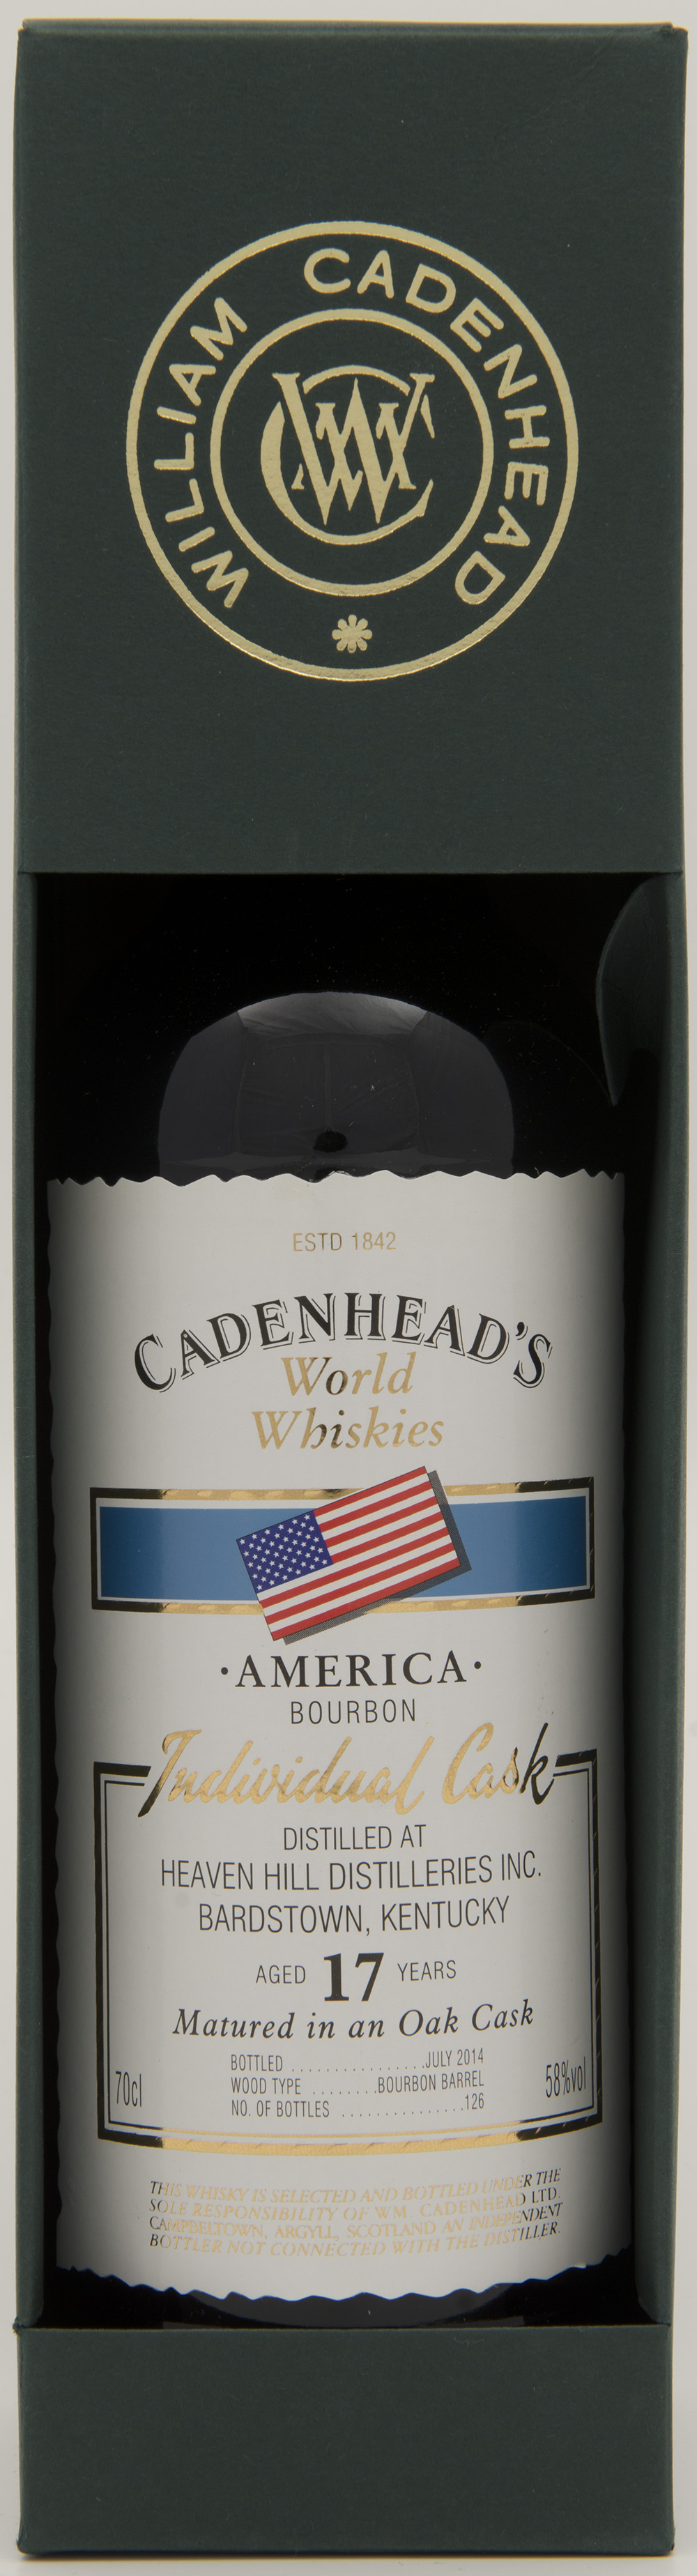 Billede: DSC_4833 - Cadenheads World Whiskies - Heaven Hill 17 years - bottle in box.jpg